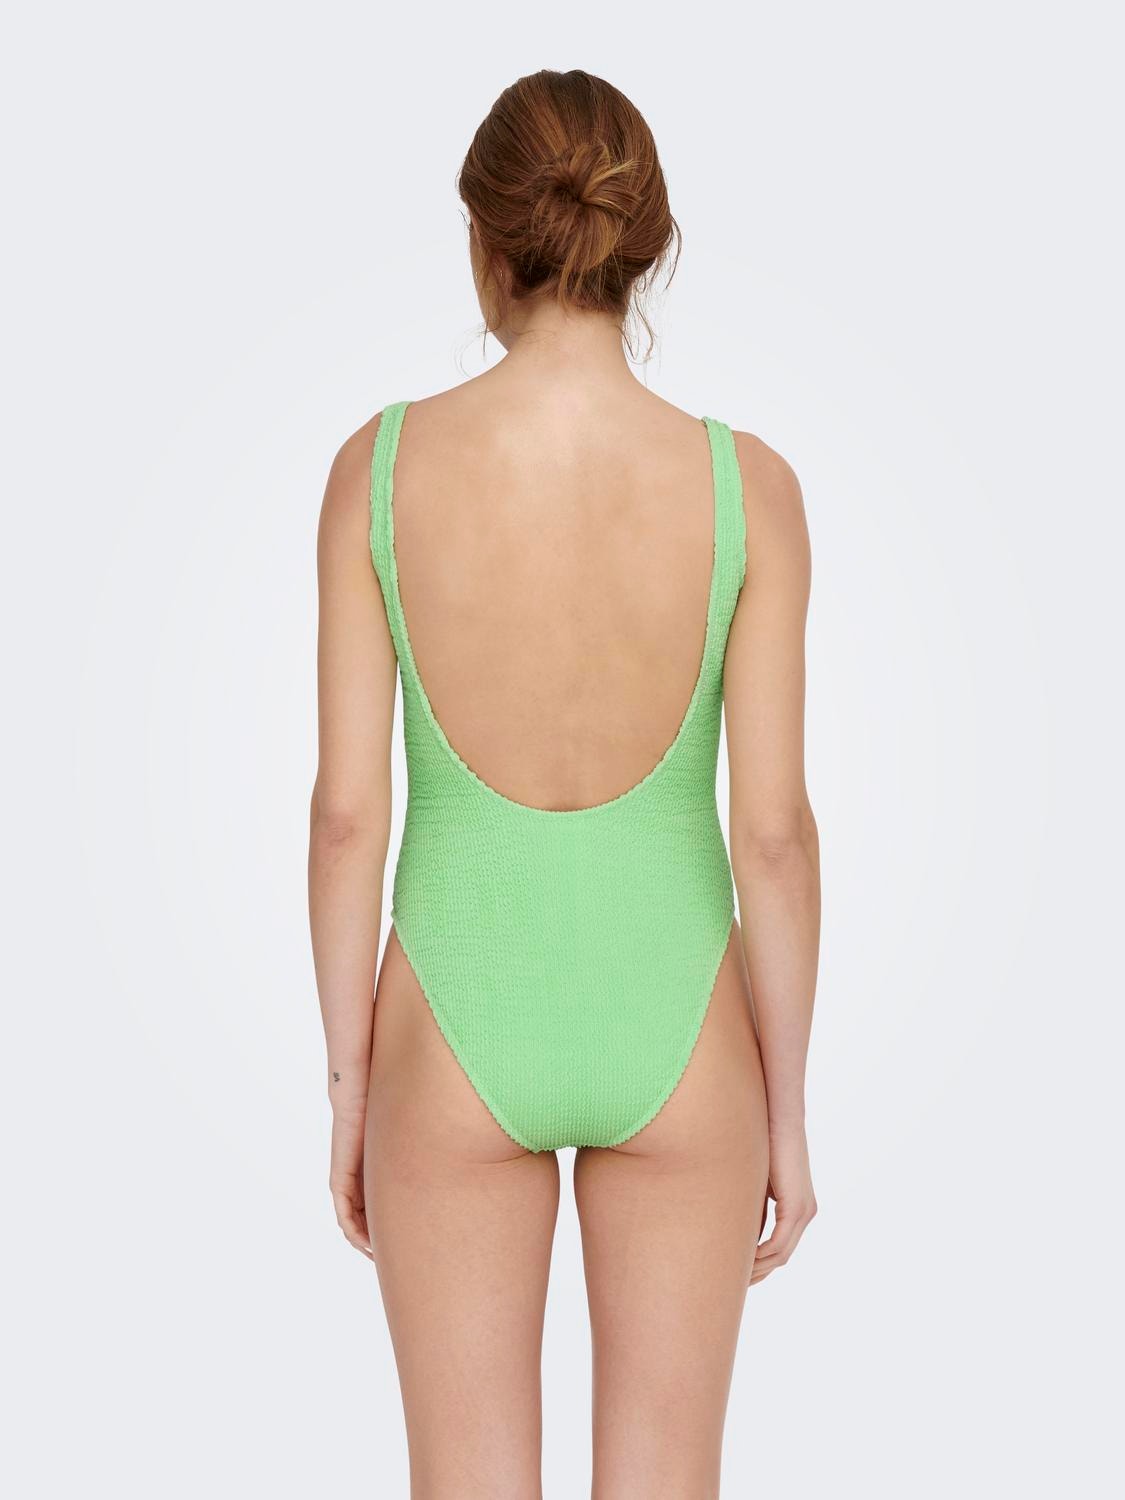 ONLY High waist Thin straps Swimwear -Paradise Green - 15282969